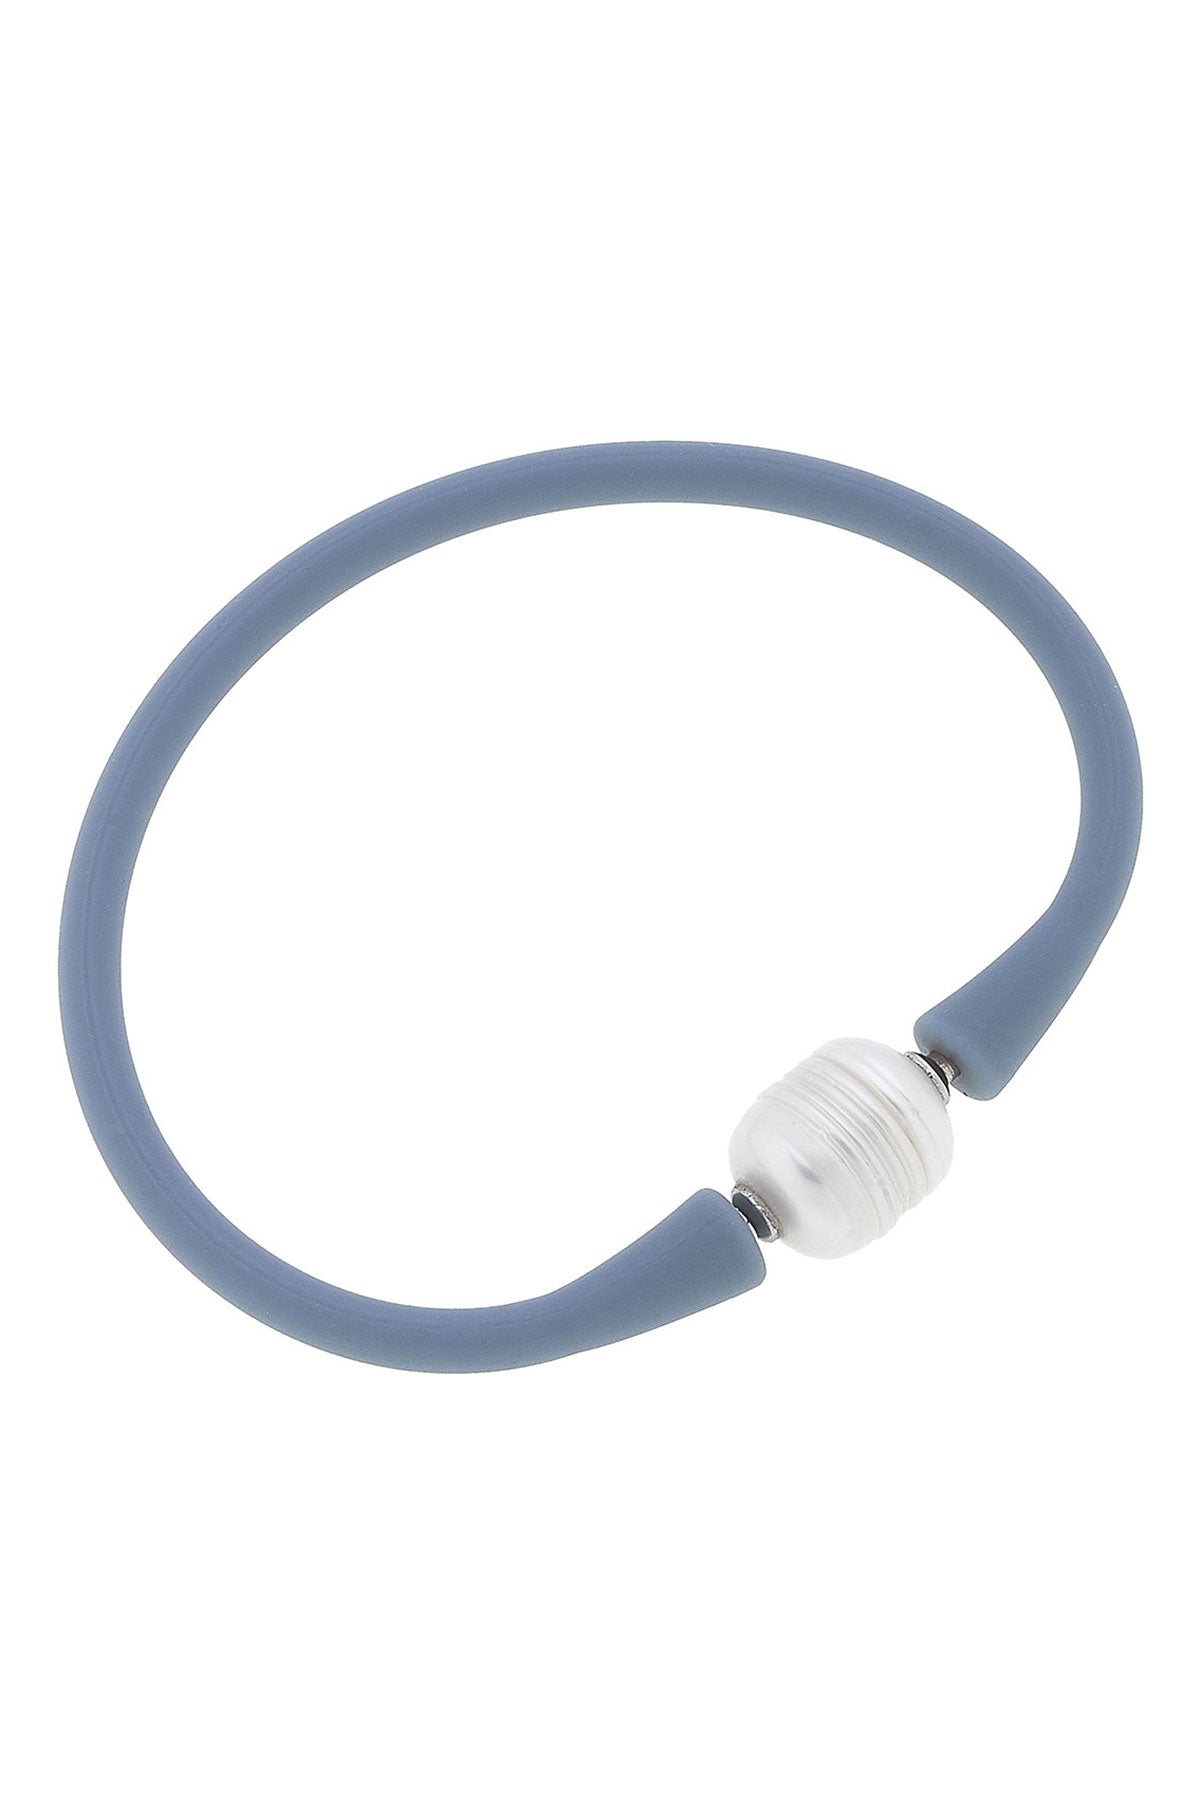 Bali Freshwater Pearl Silicone Bracelet in Blue Grey